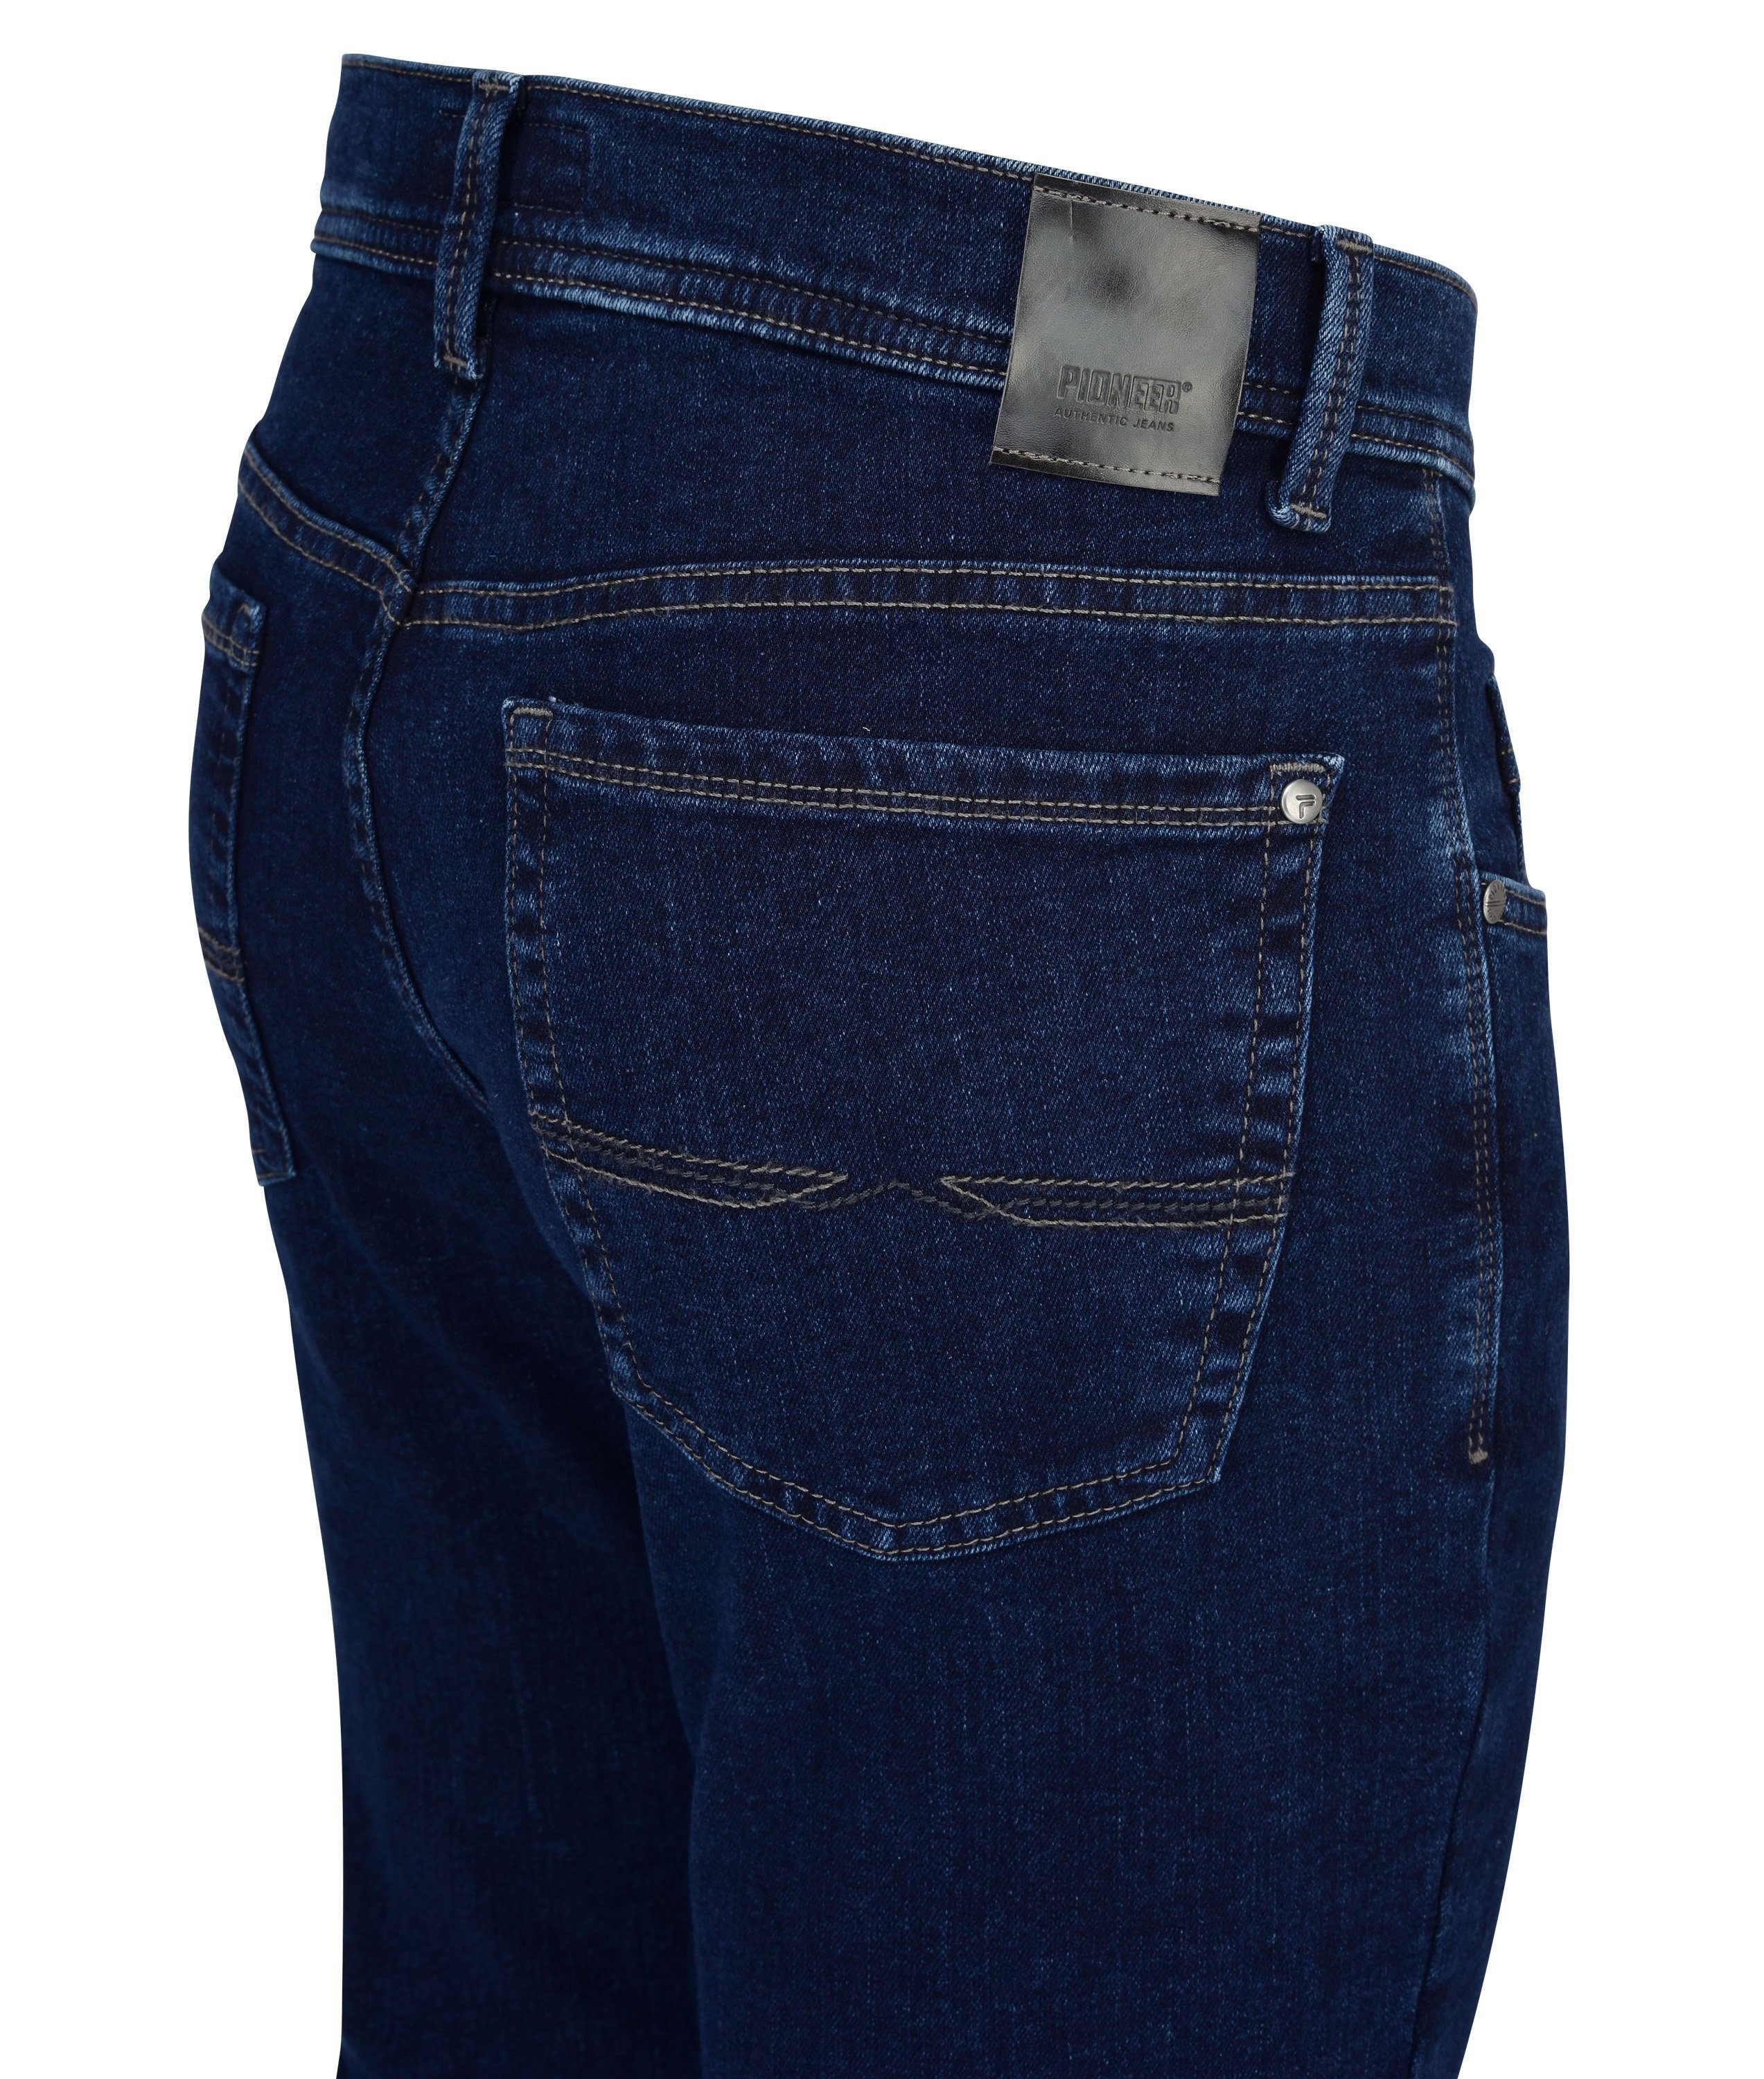 dark 5-Pocket-Jeans RANDO Jeans Pioneer 9504.04 stone 1680 Authentic THERMO - PIONEER